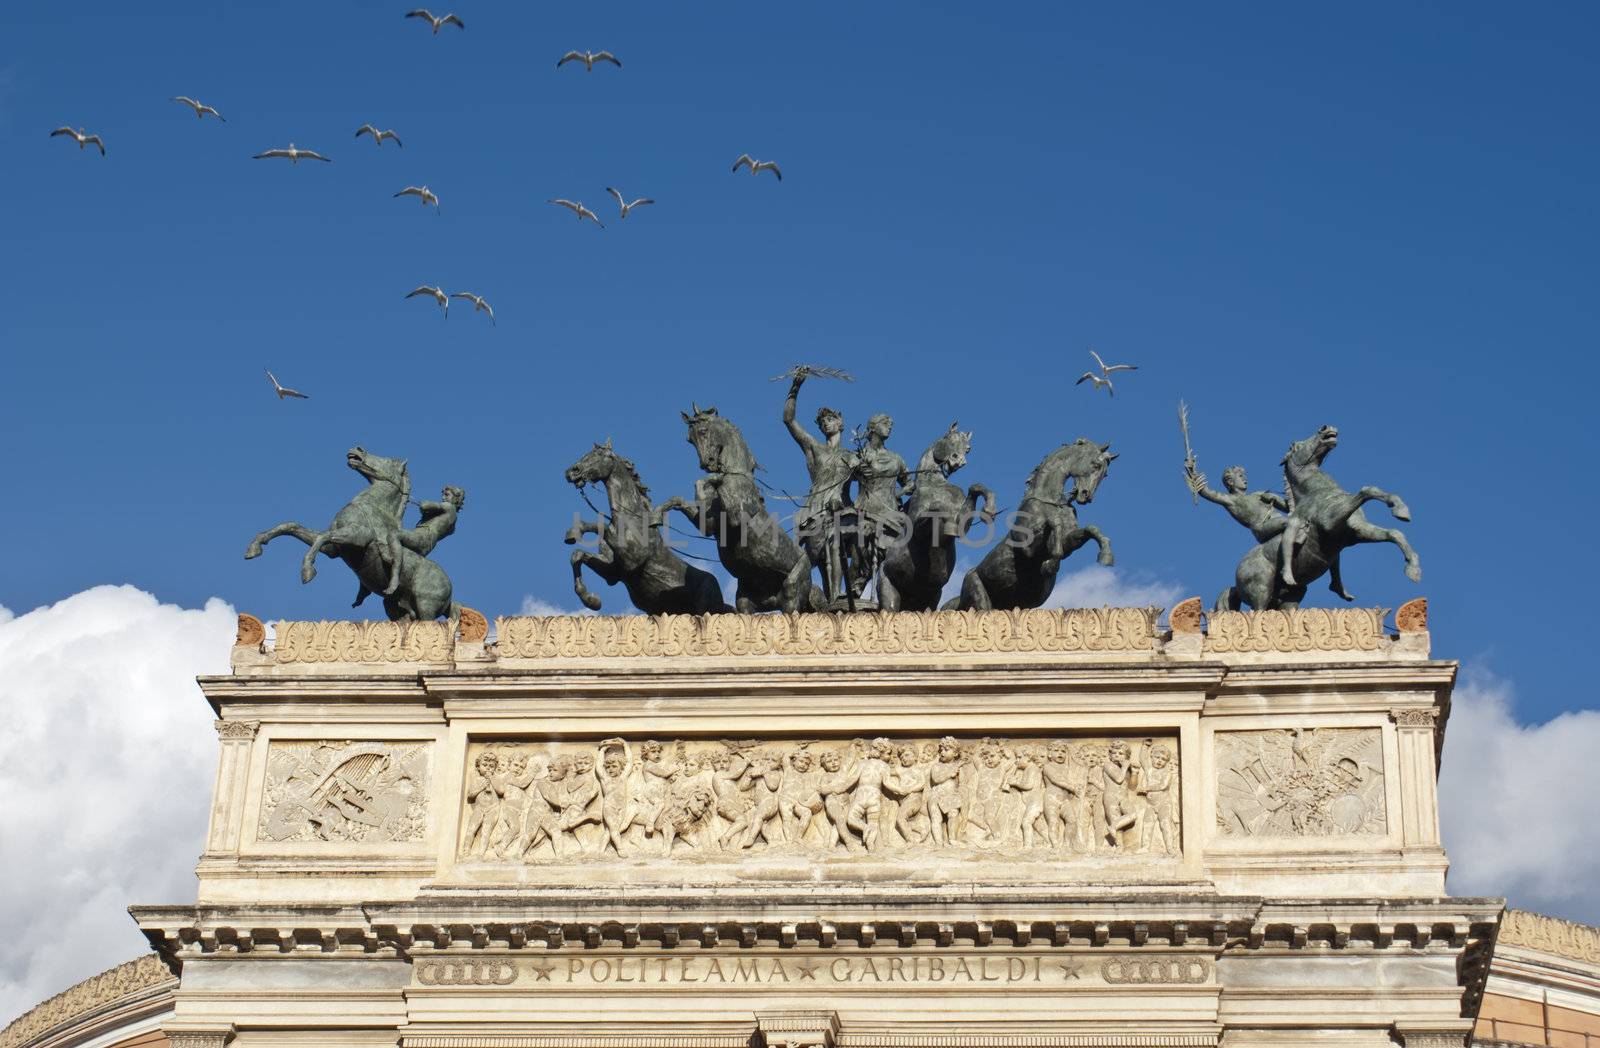 Politeama Garibaldi theater in Palermo with seagulls by gandolfocannatella